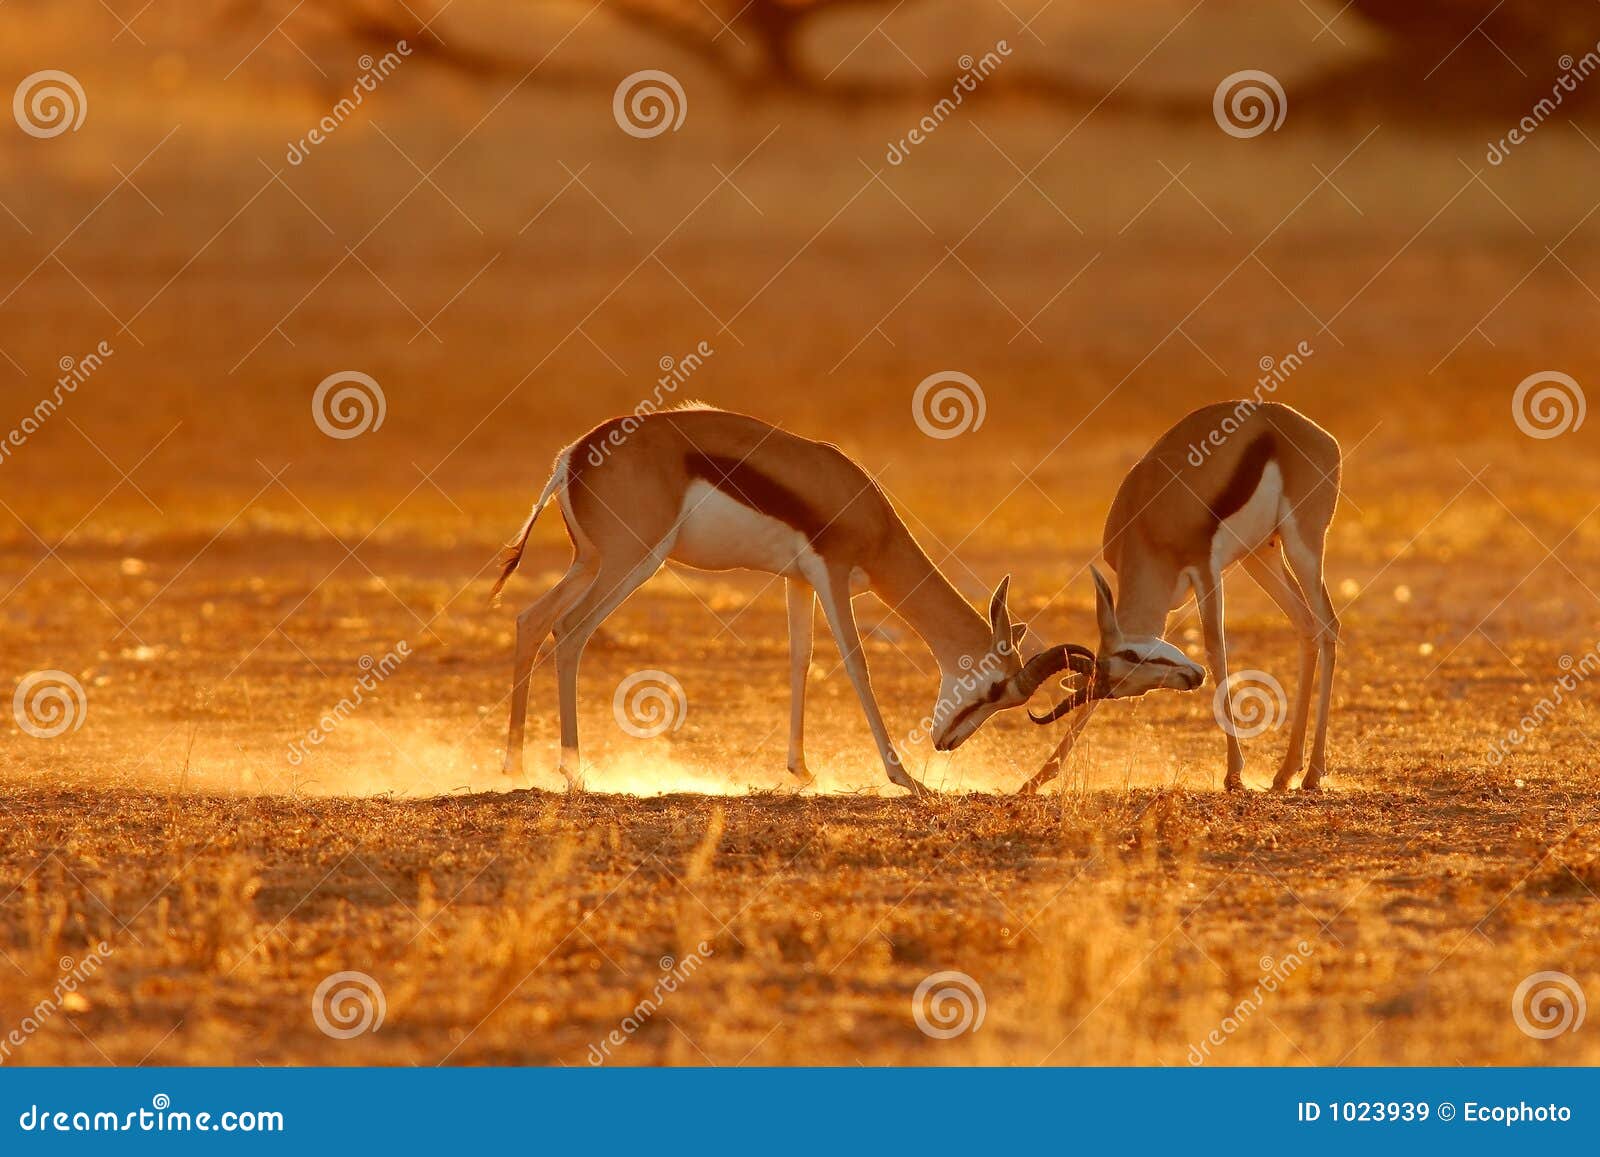 fighting springbok antelopes